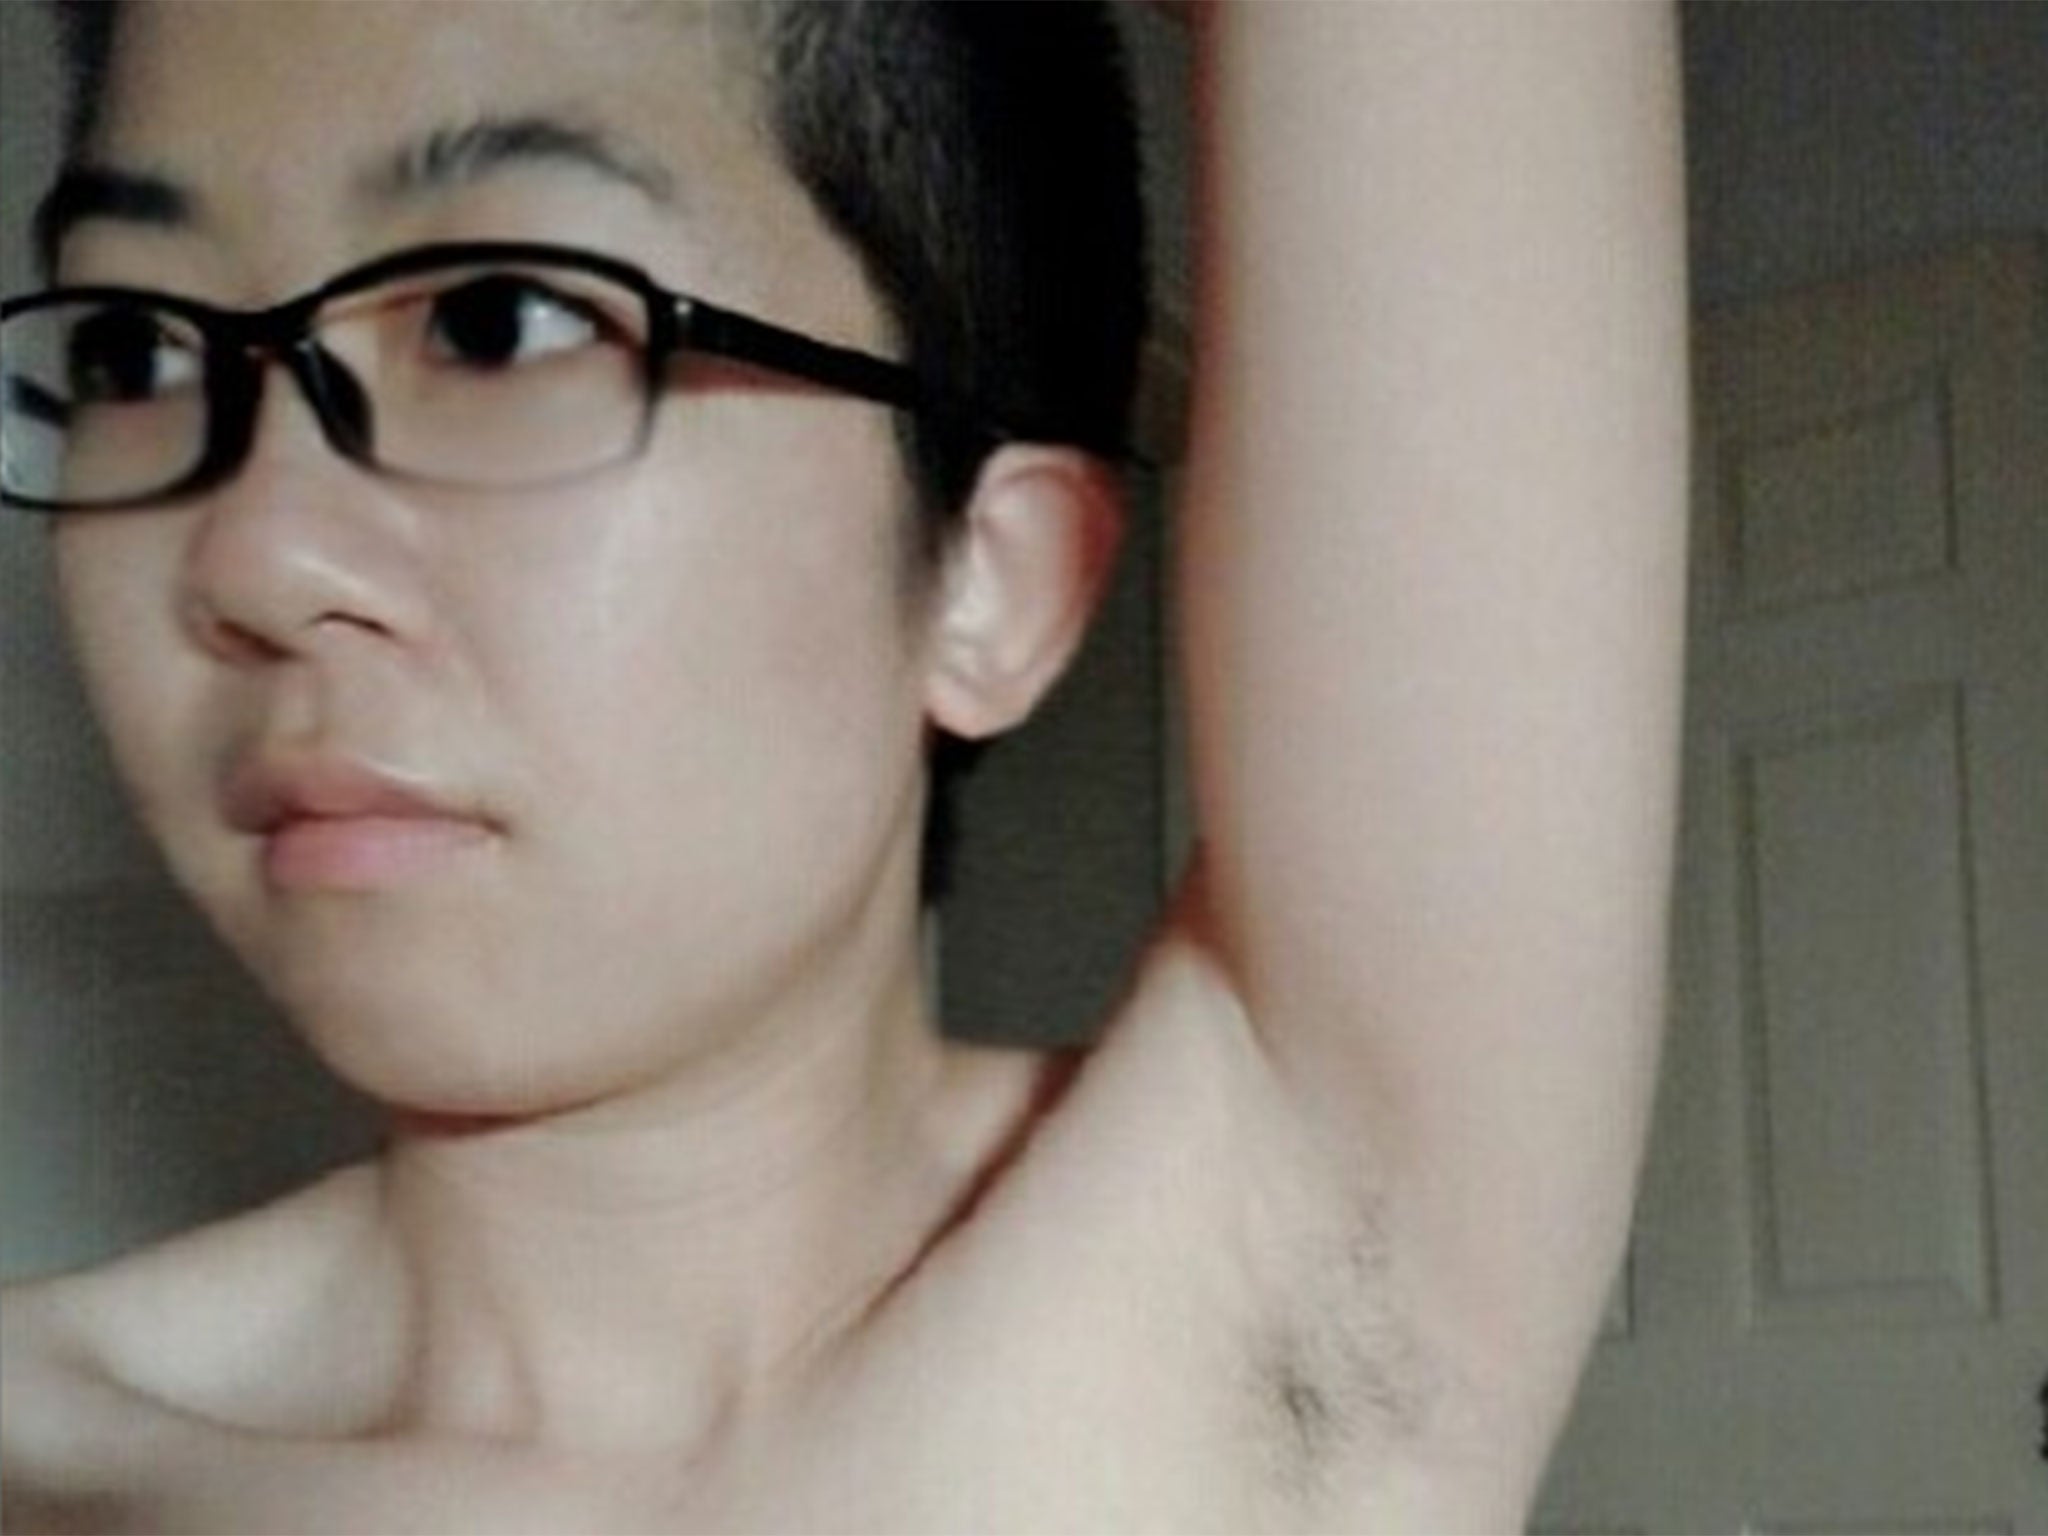 Hairy Pregnant Asian Porn - asian hairy armpits - 'hairy armpits asian' Search - XVIDEOS.COM